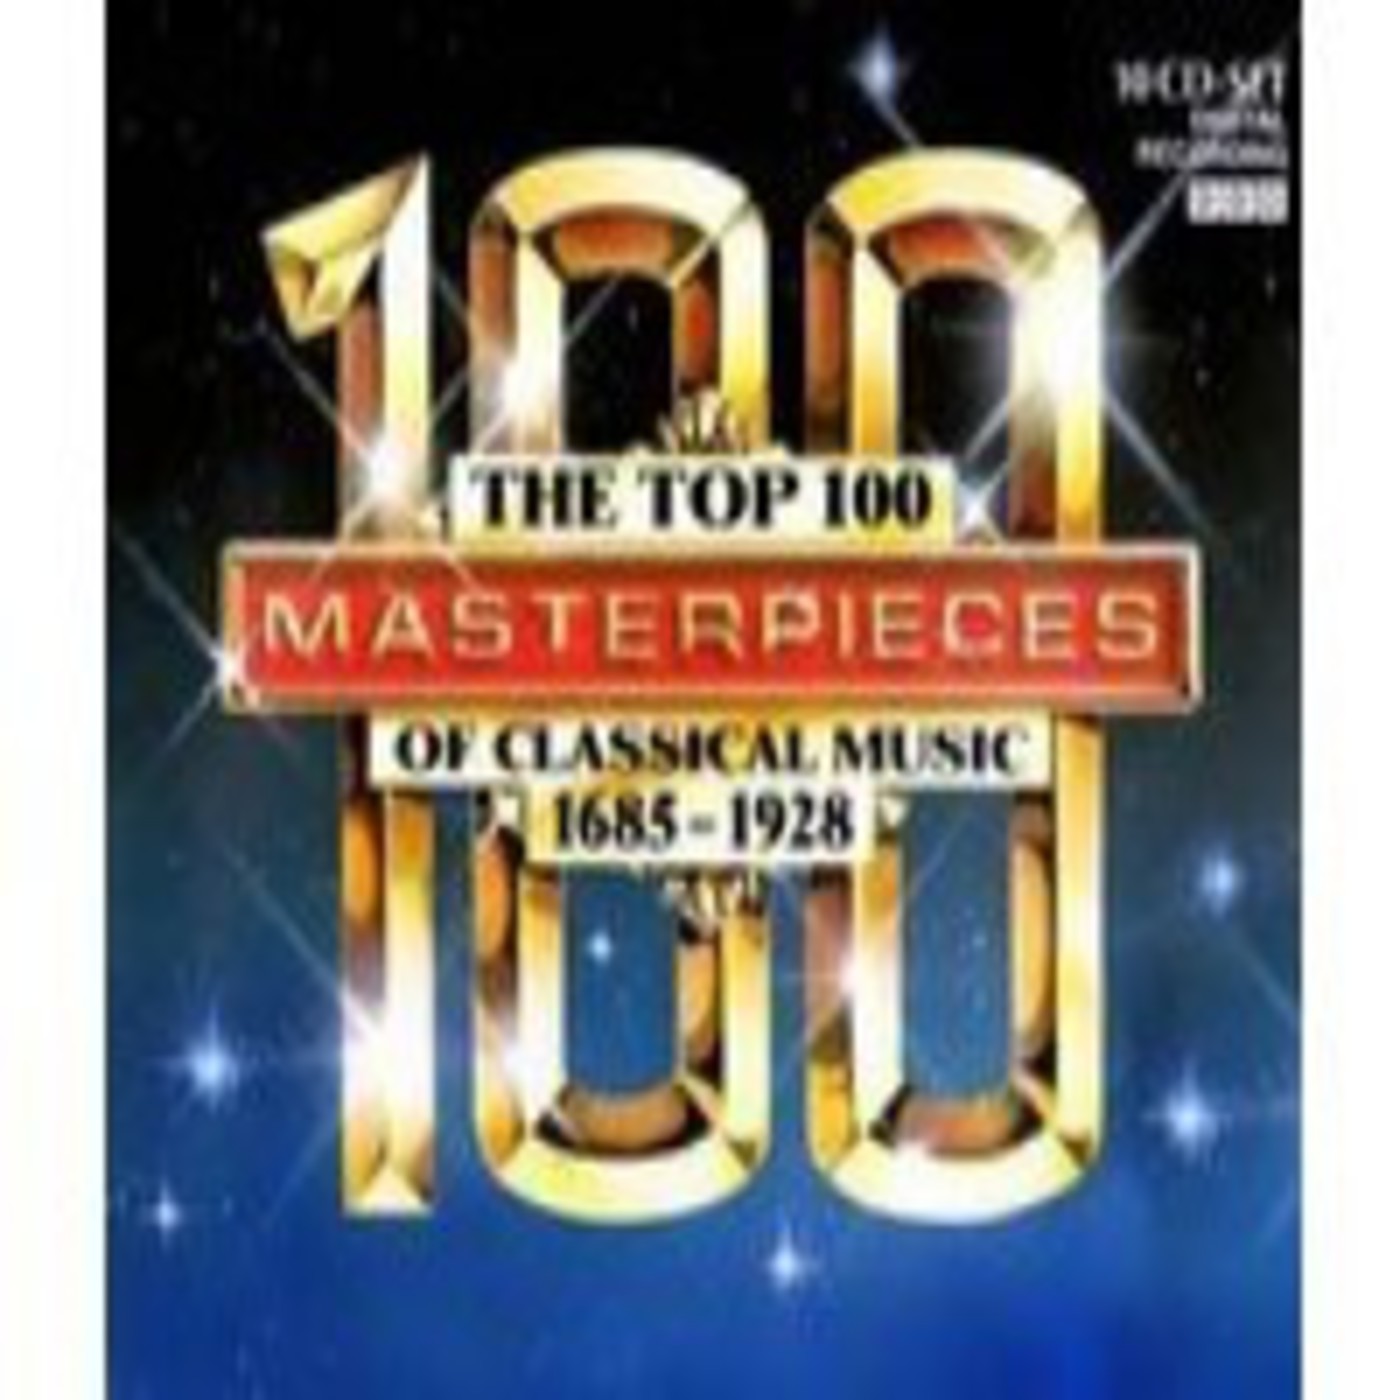 50 classical music masterpieces